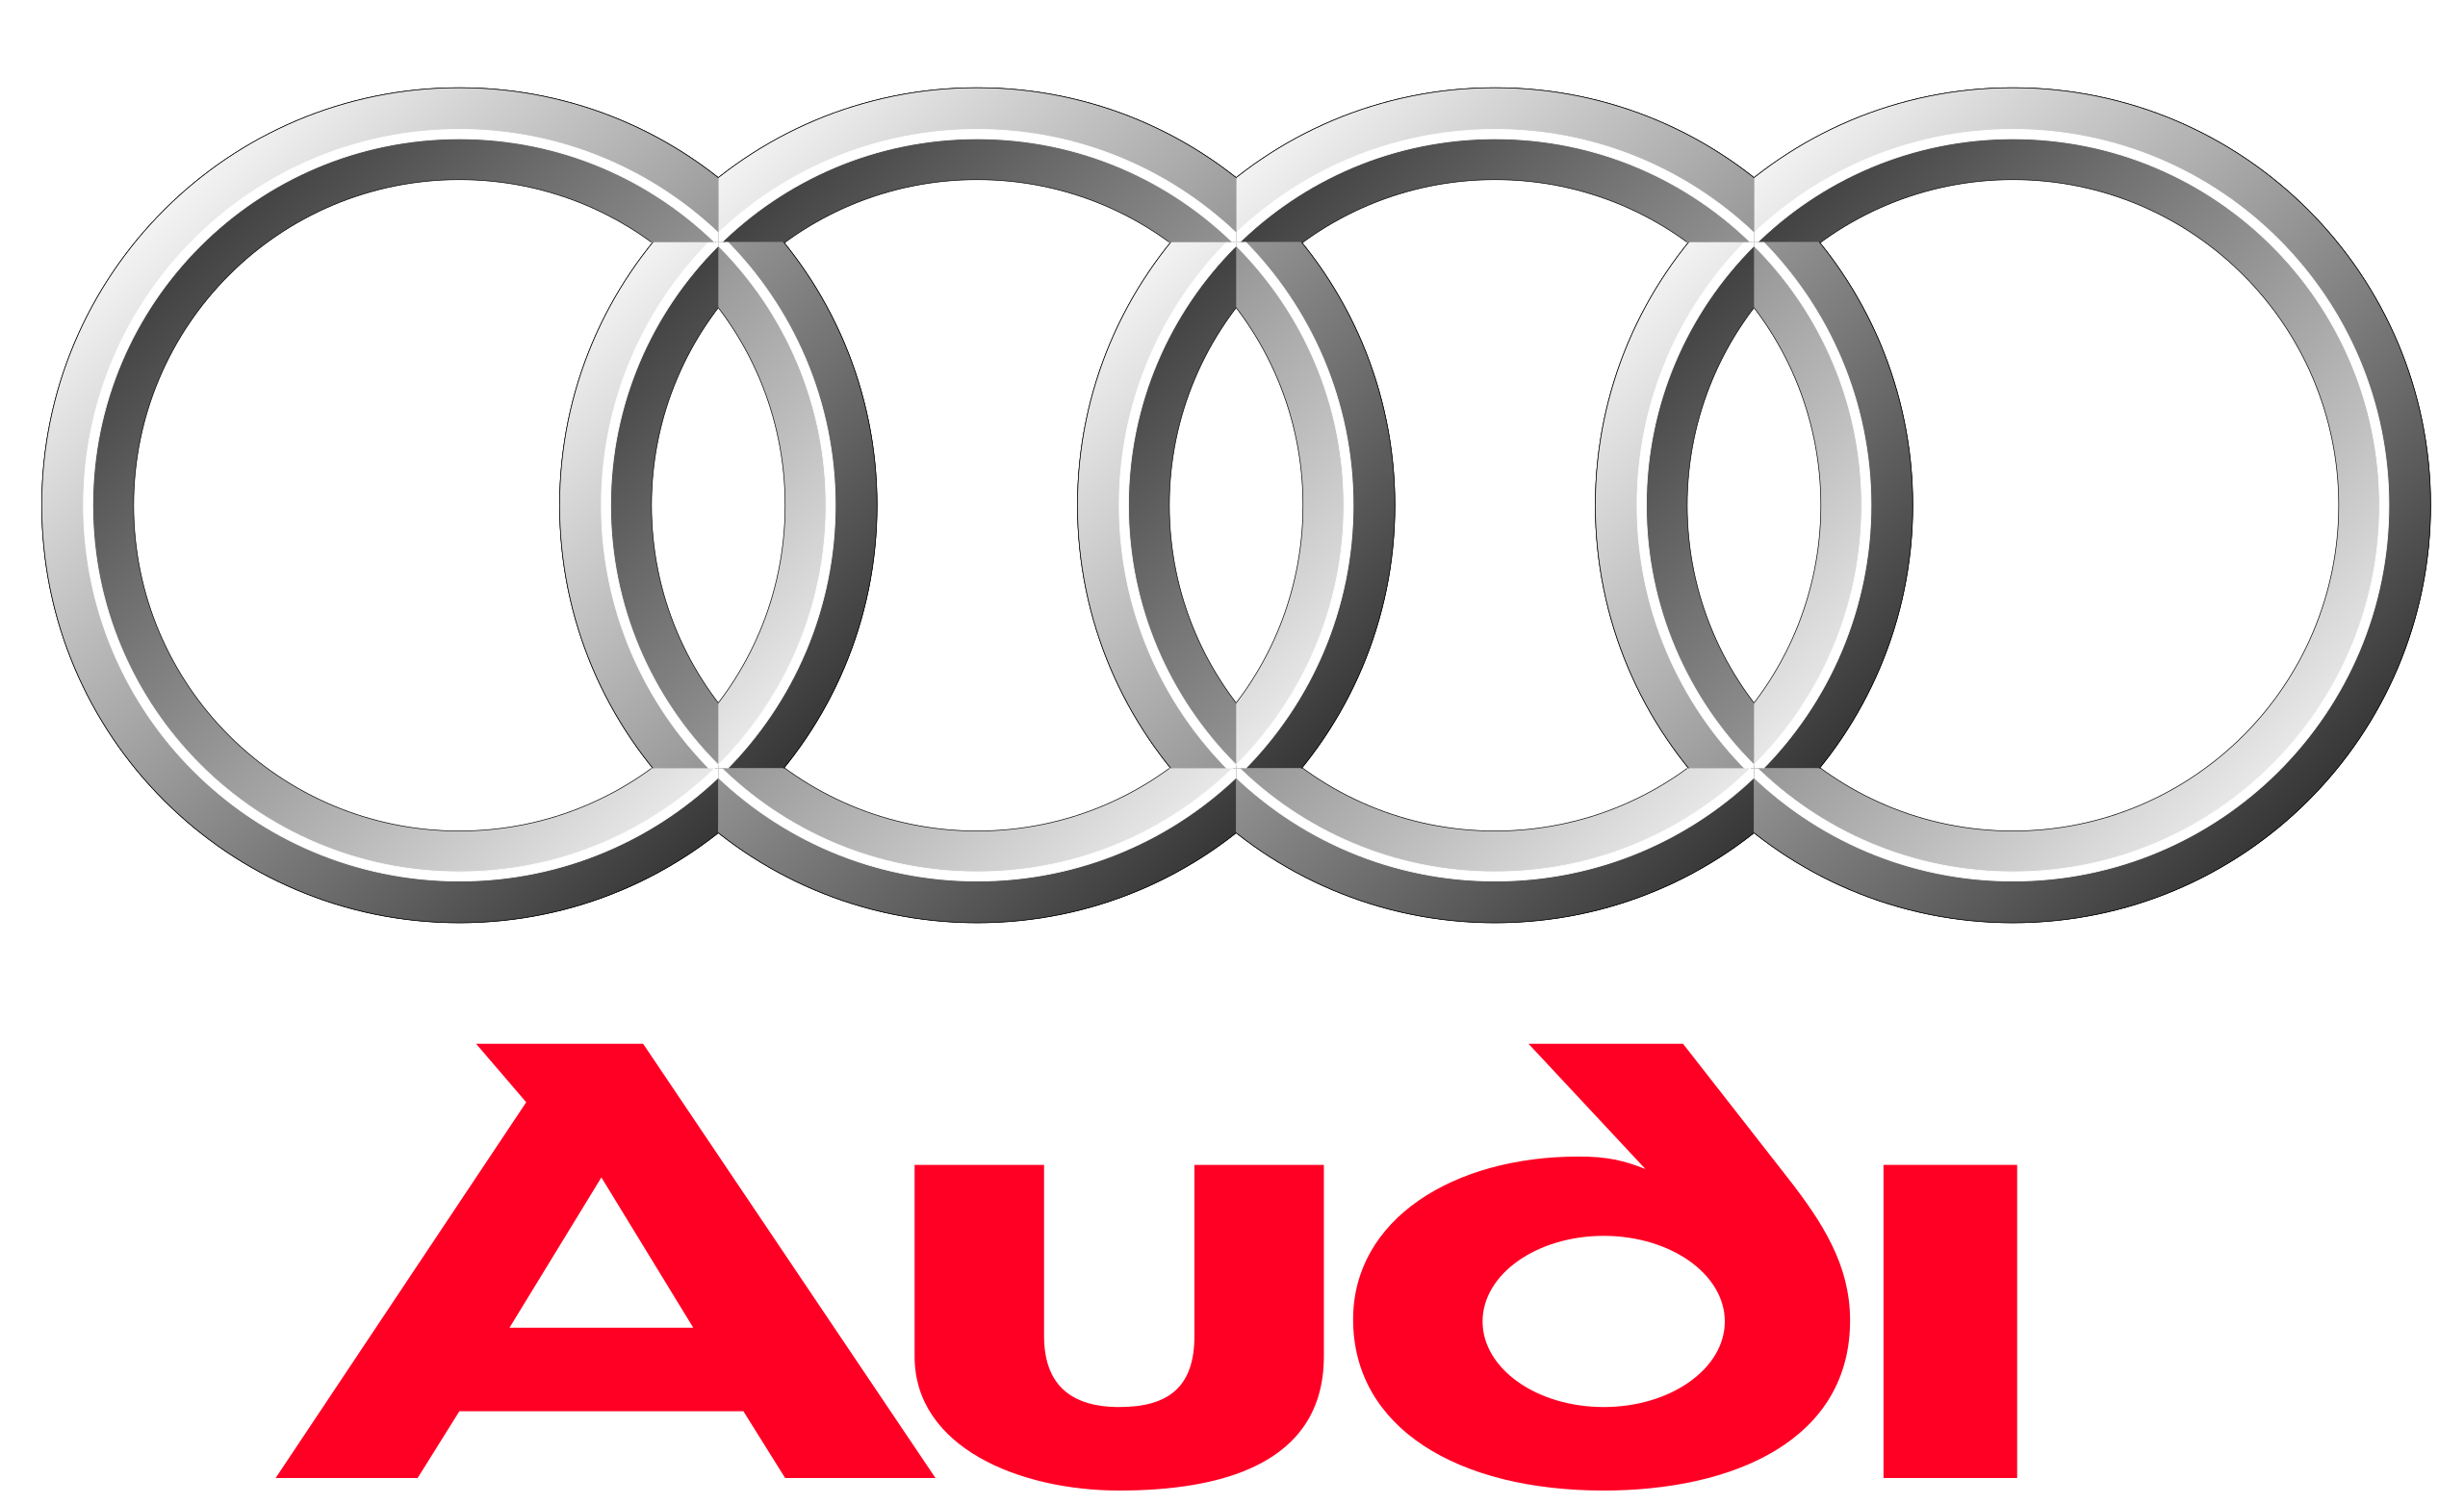 https://upload.wikimedia.org/wikipedia/de/thumb/1/15/Audi_logo.svg/2560px-Audi_logo.svg.png